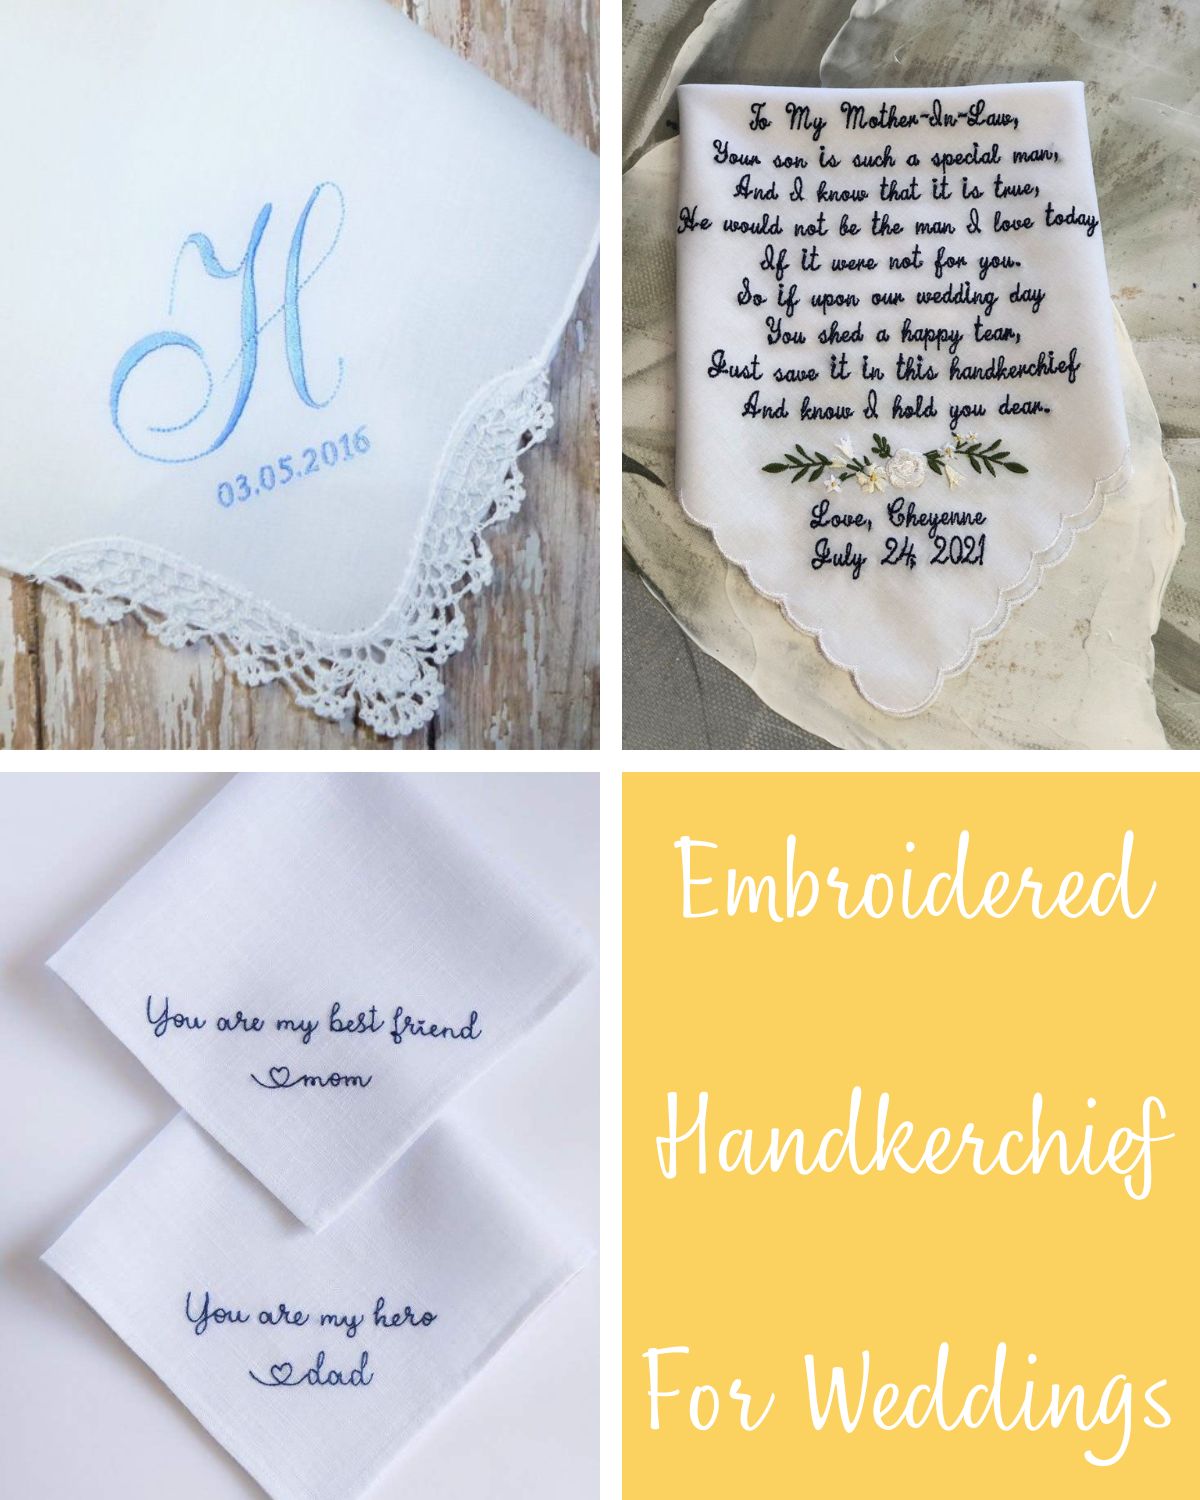 Three wedding handkerchiefs 